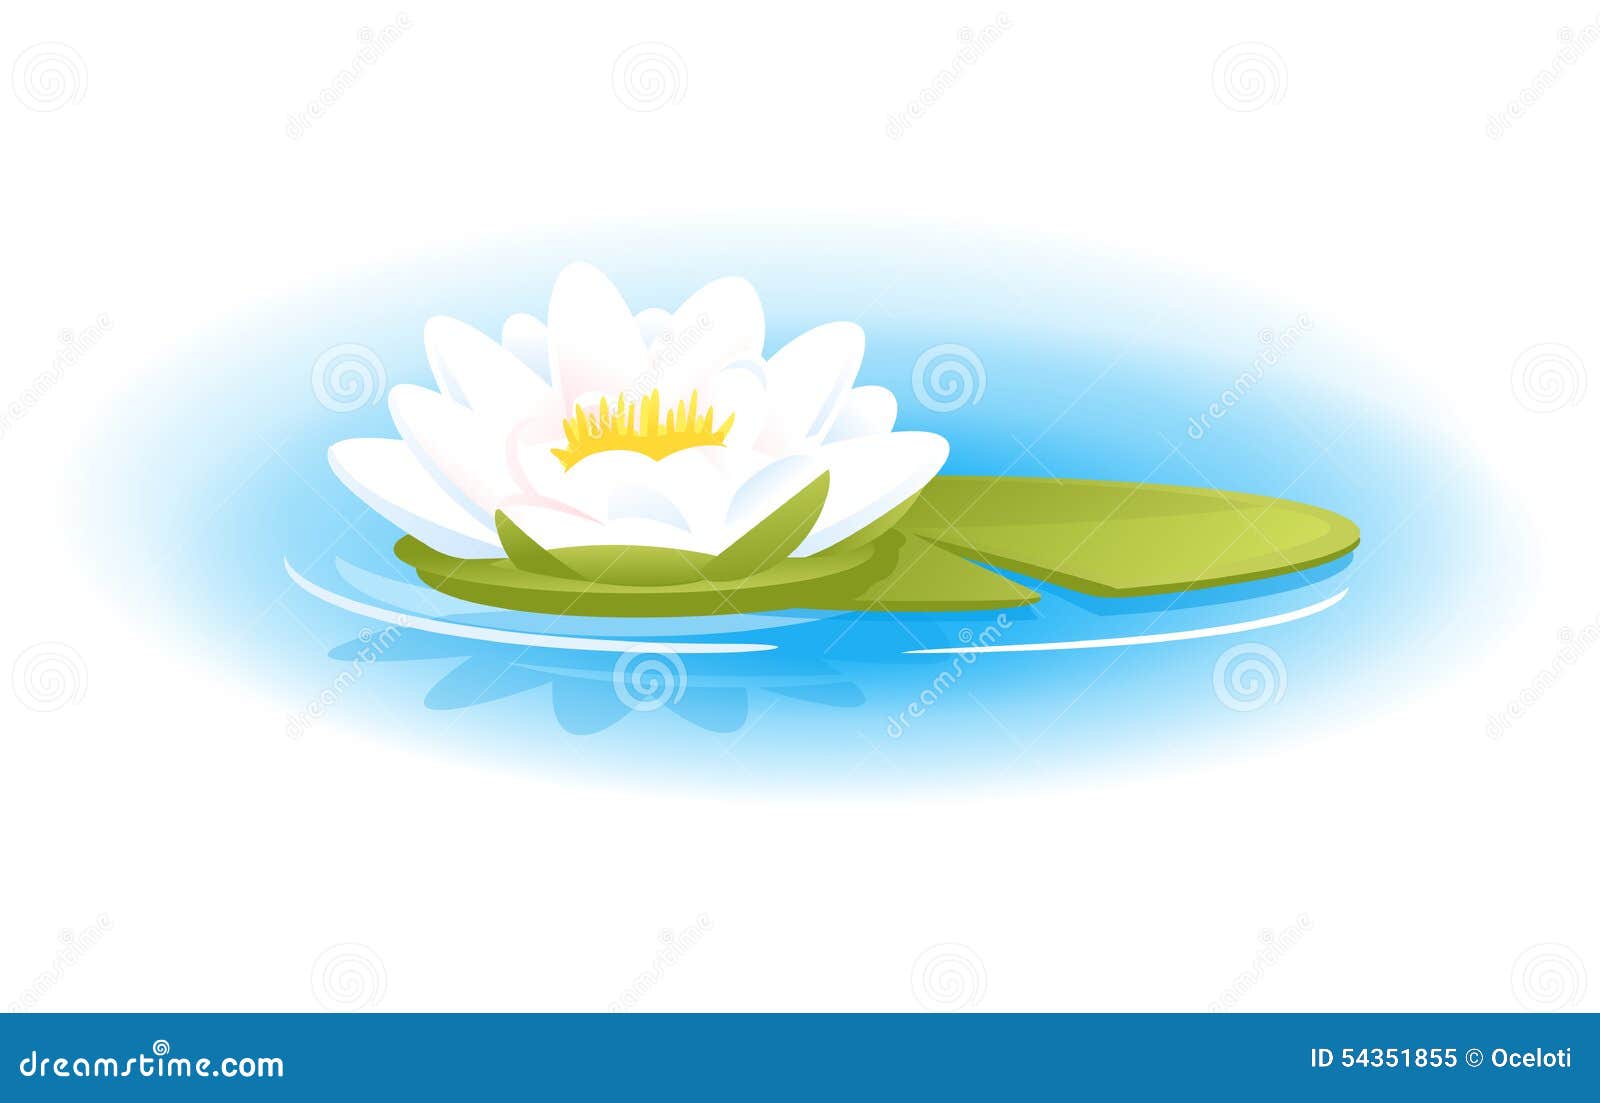 Water lilly. Één stroomversnellinglelie met groen blad op blauw water